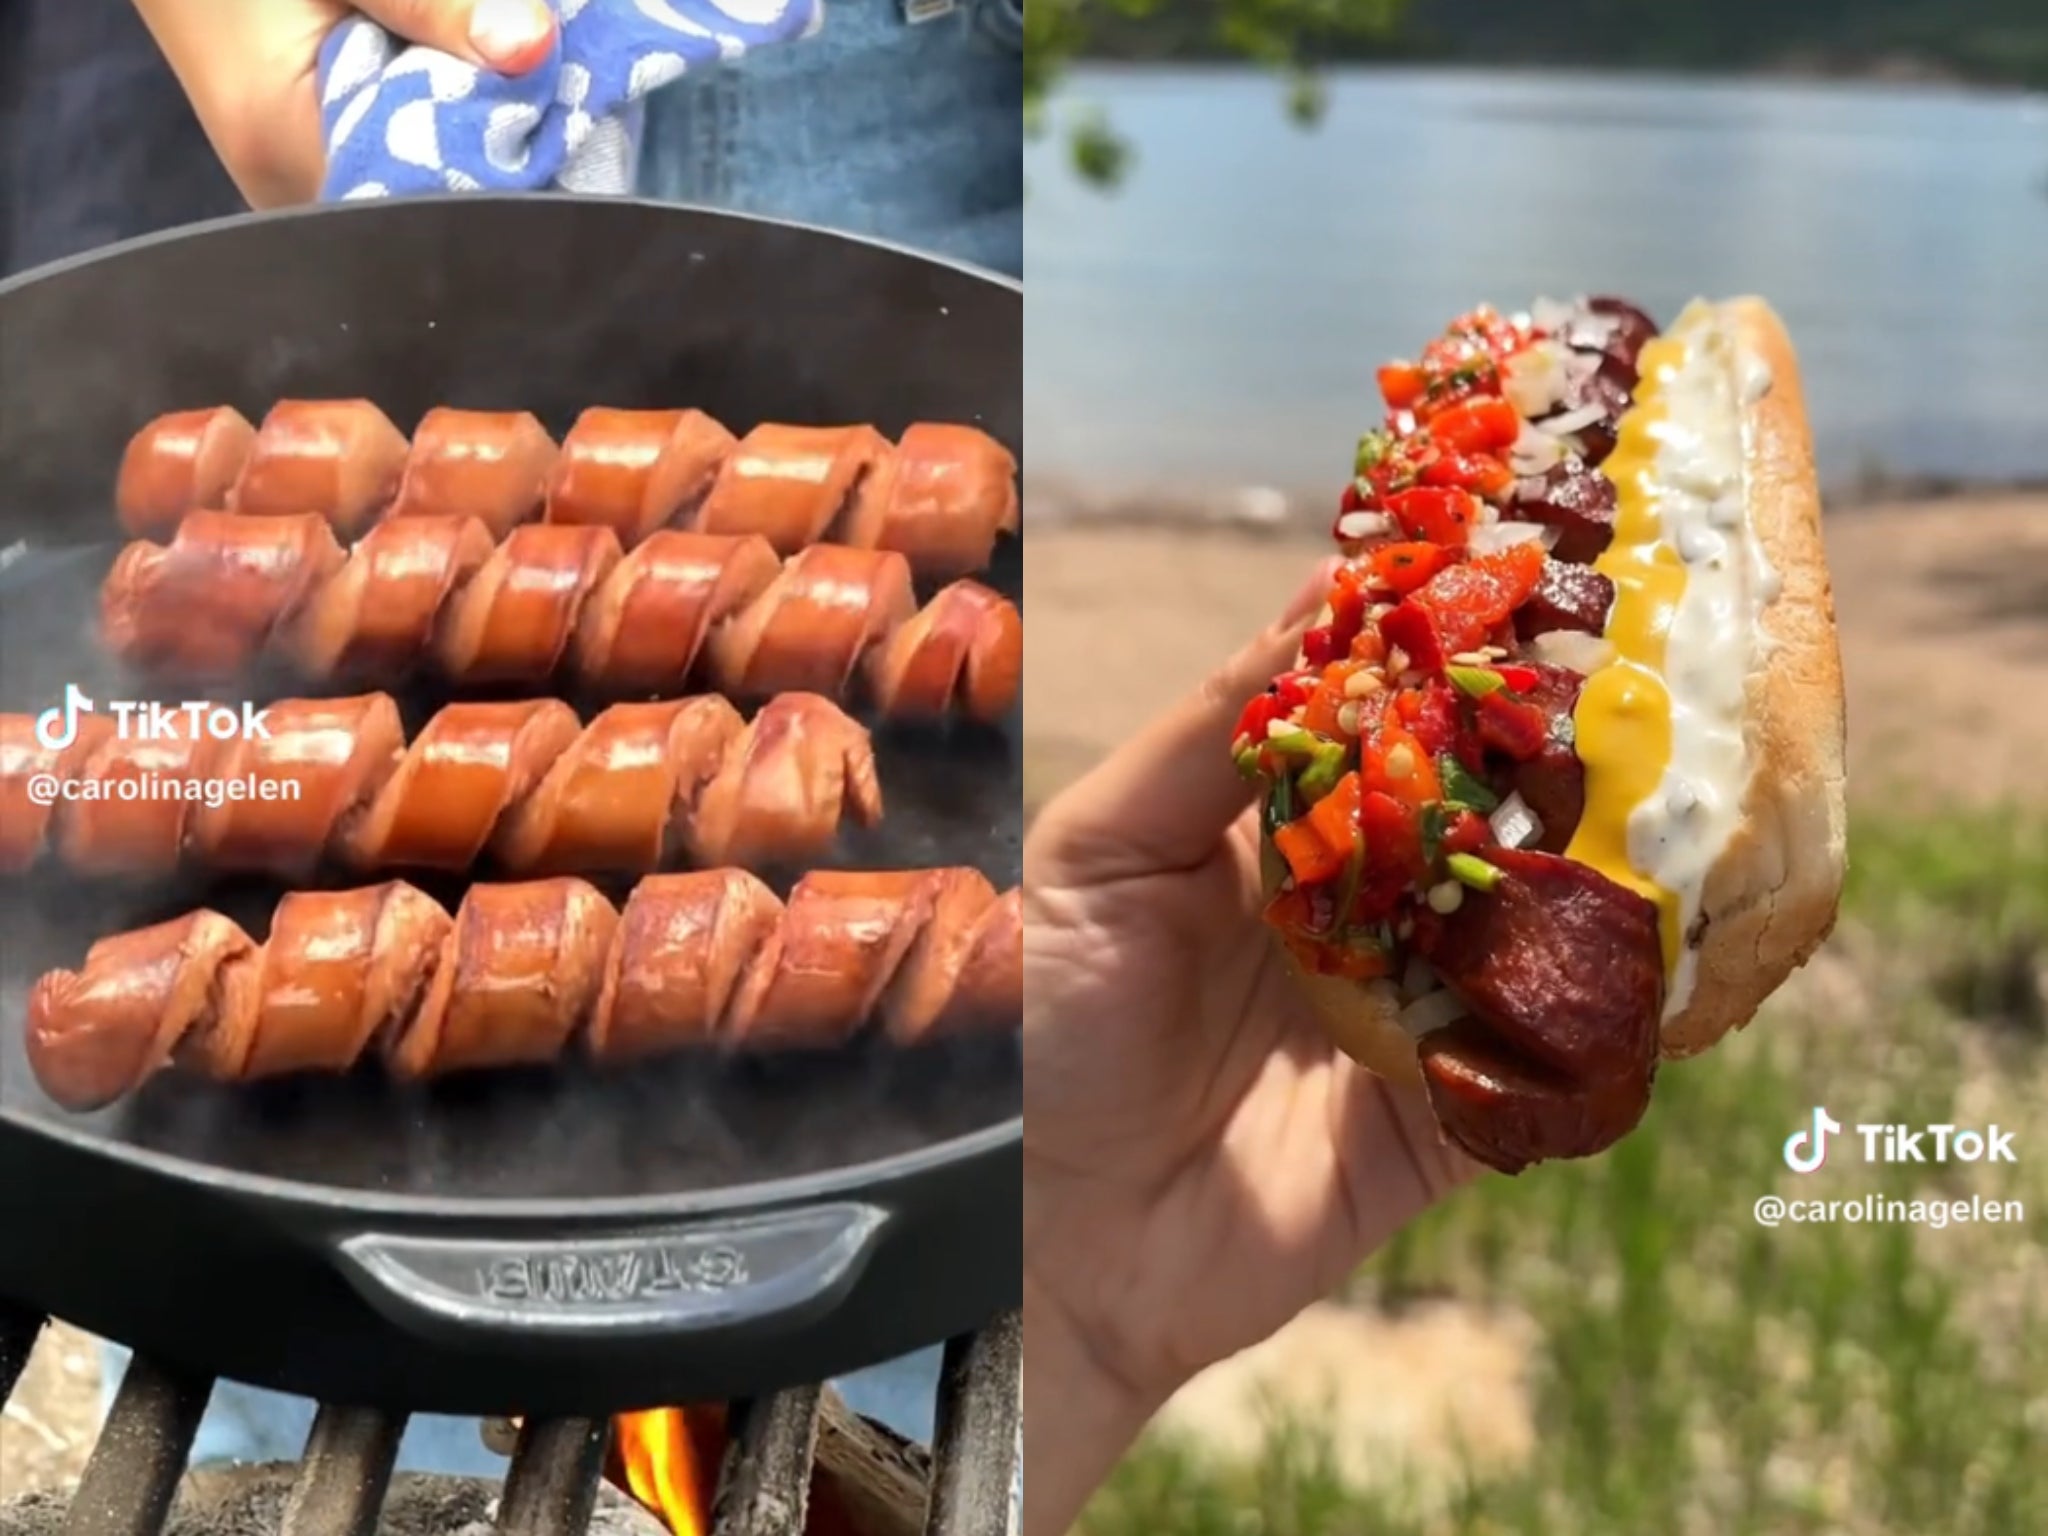 Cook Cook Real Hotdog